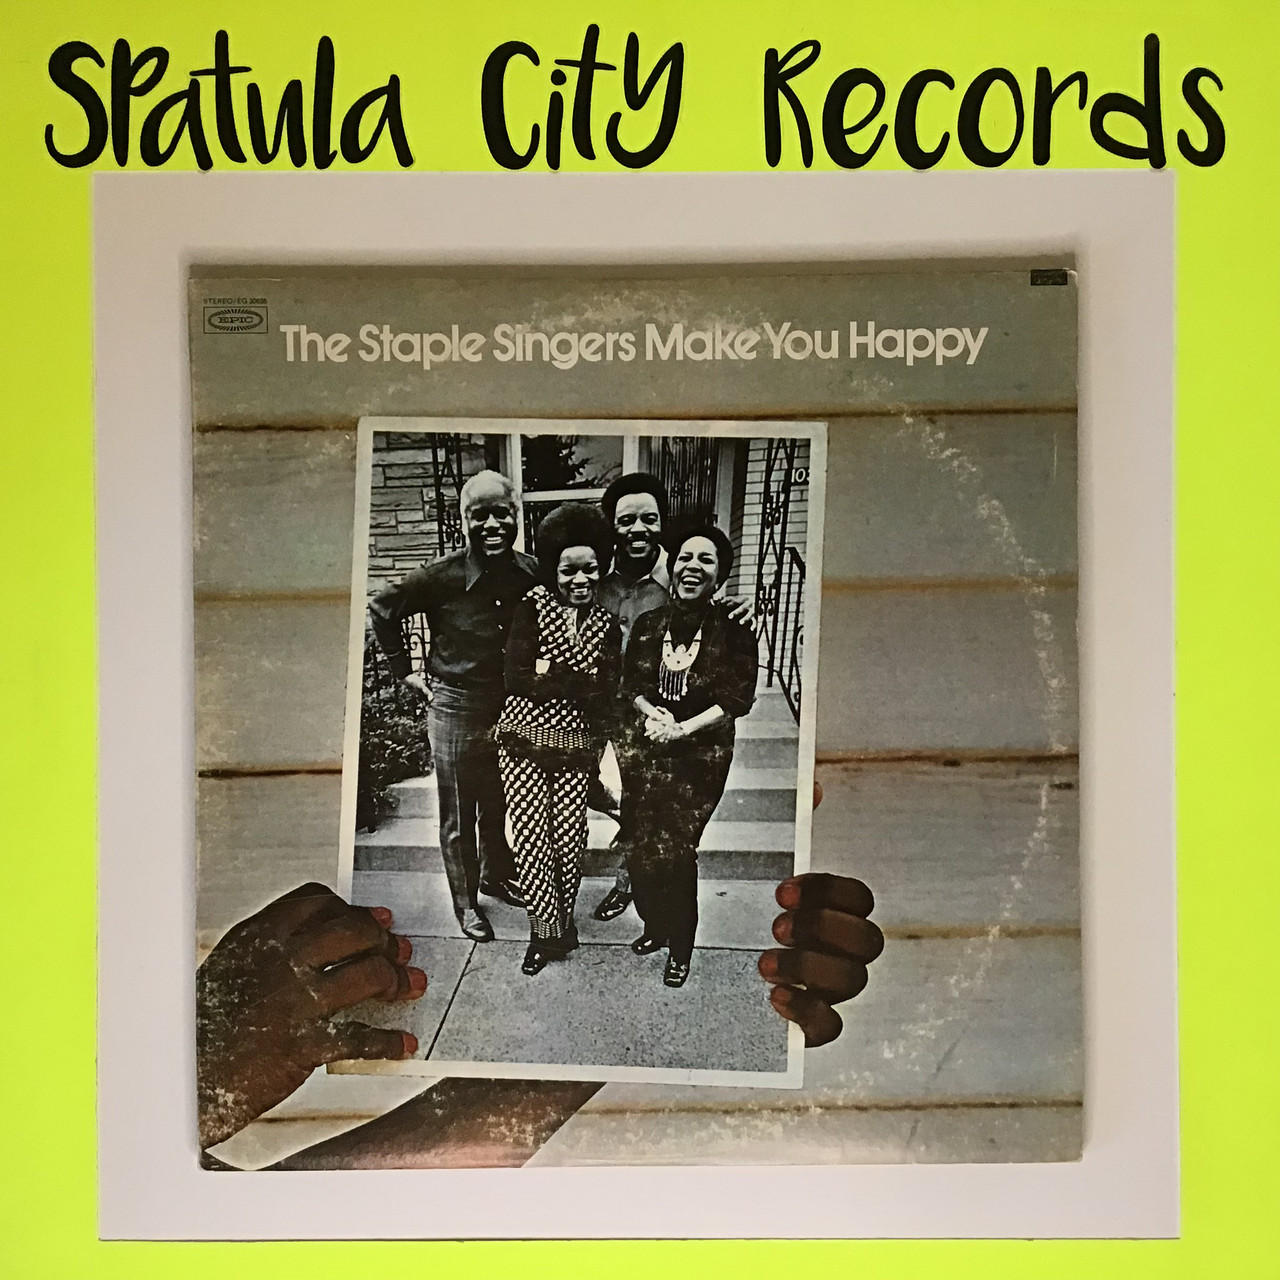 Staple Singers, The - The Staple Singers Make You Happy - double vinyl record LP